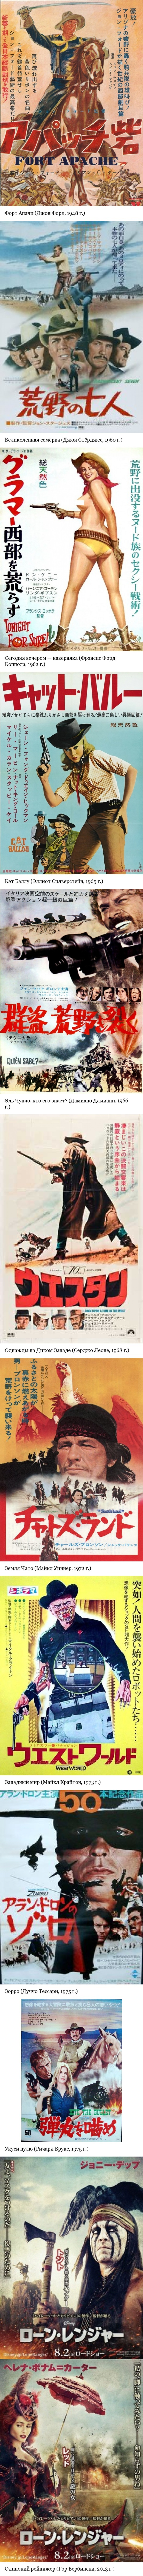 japanese_movie_posters